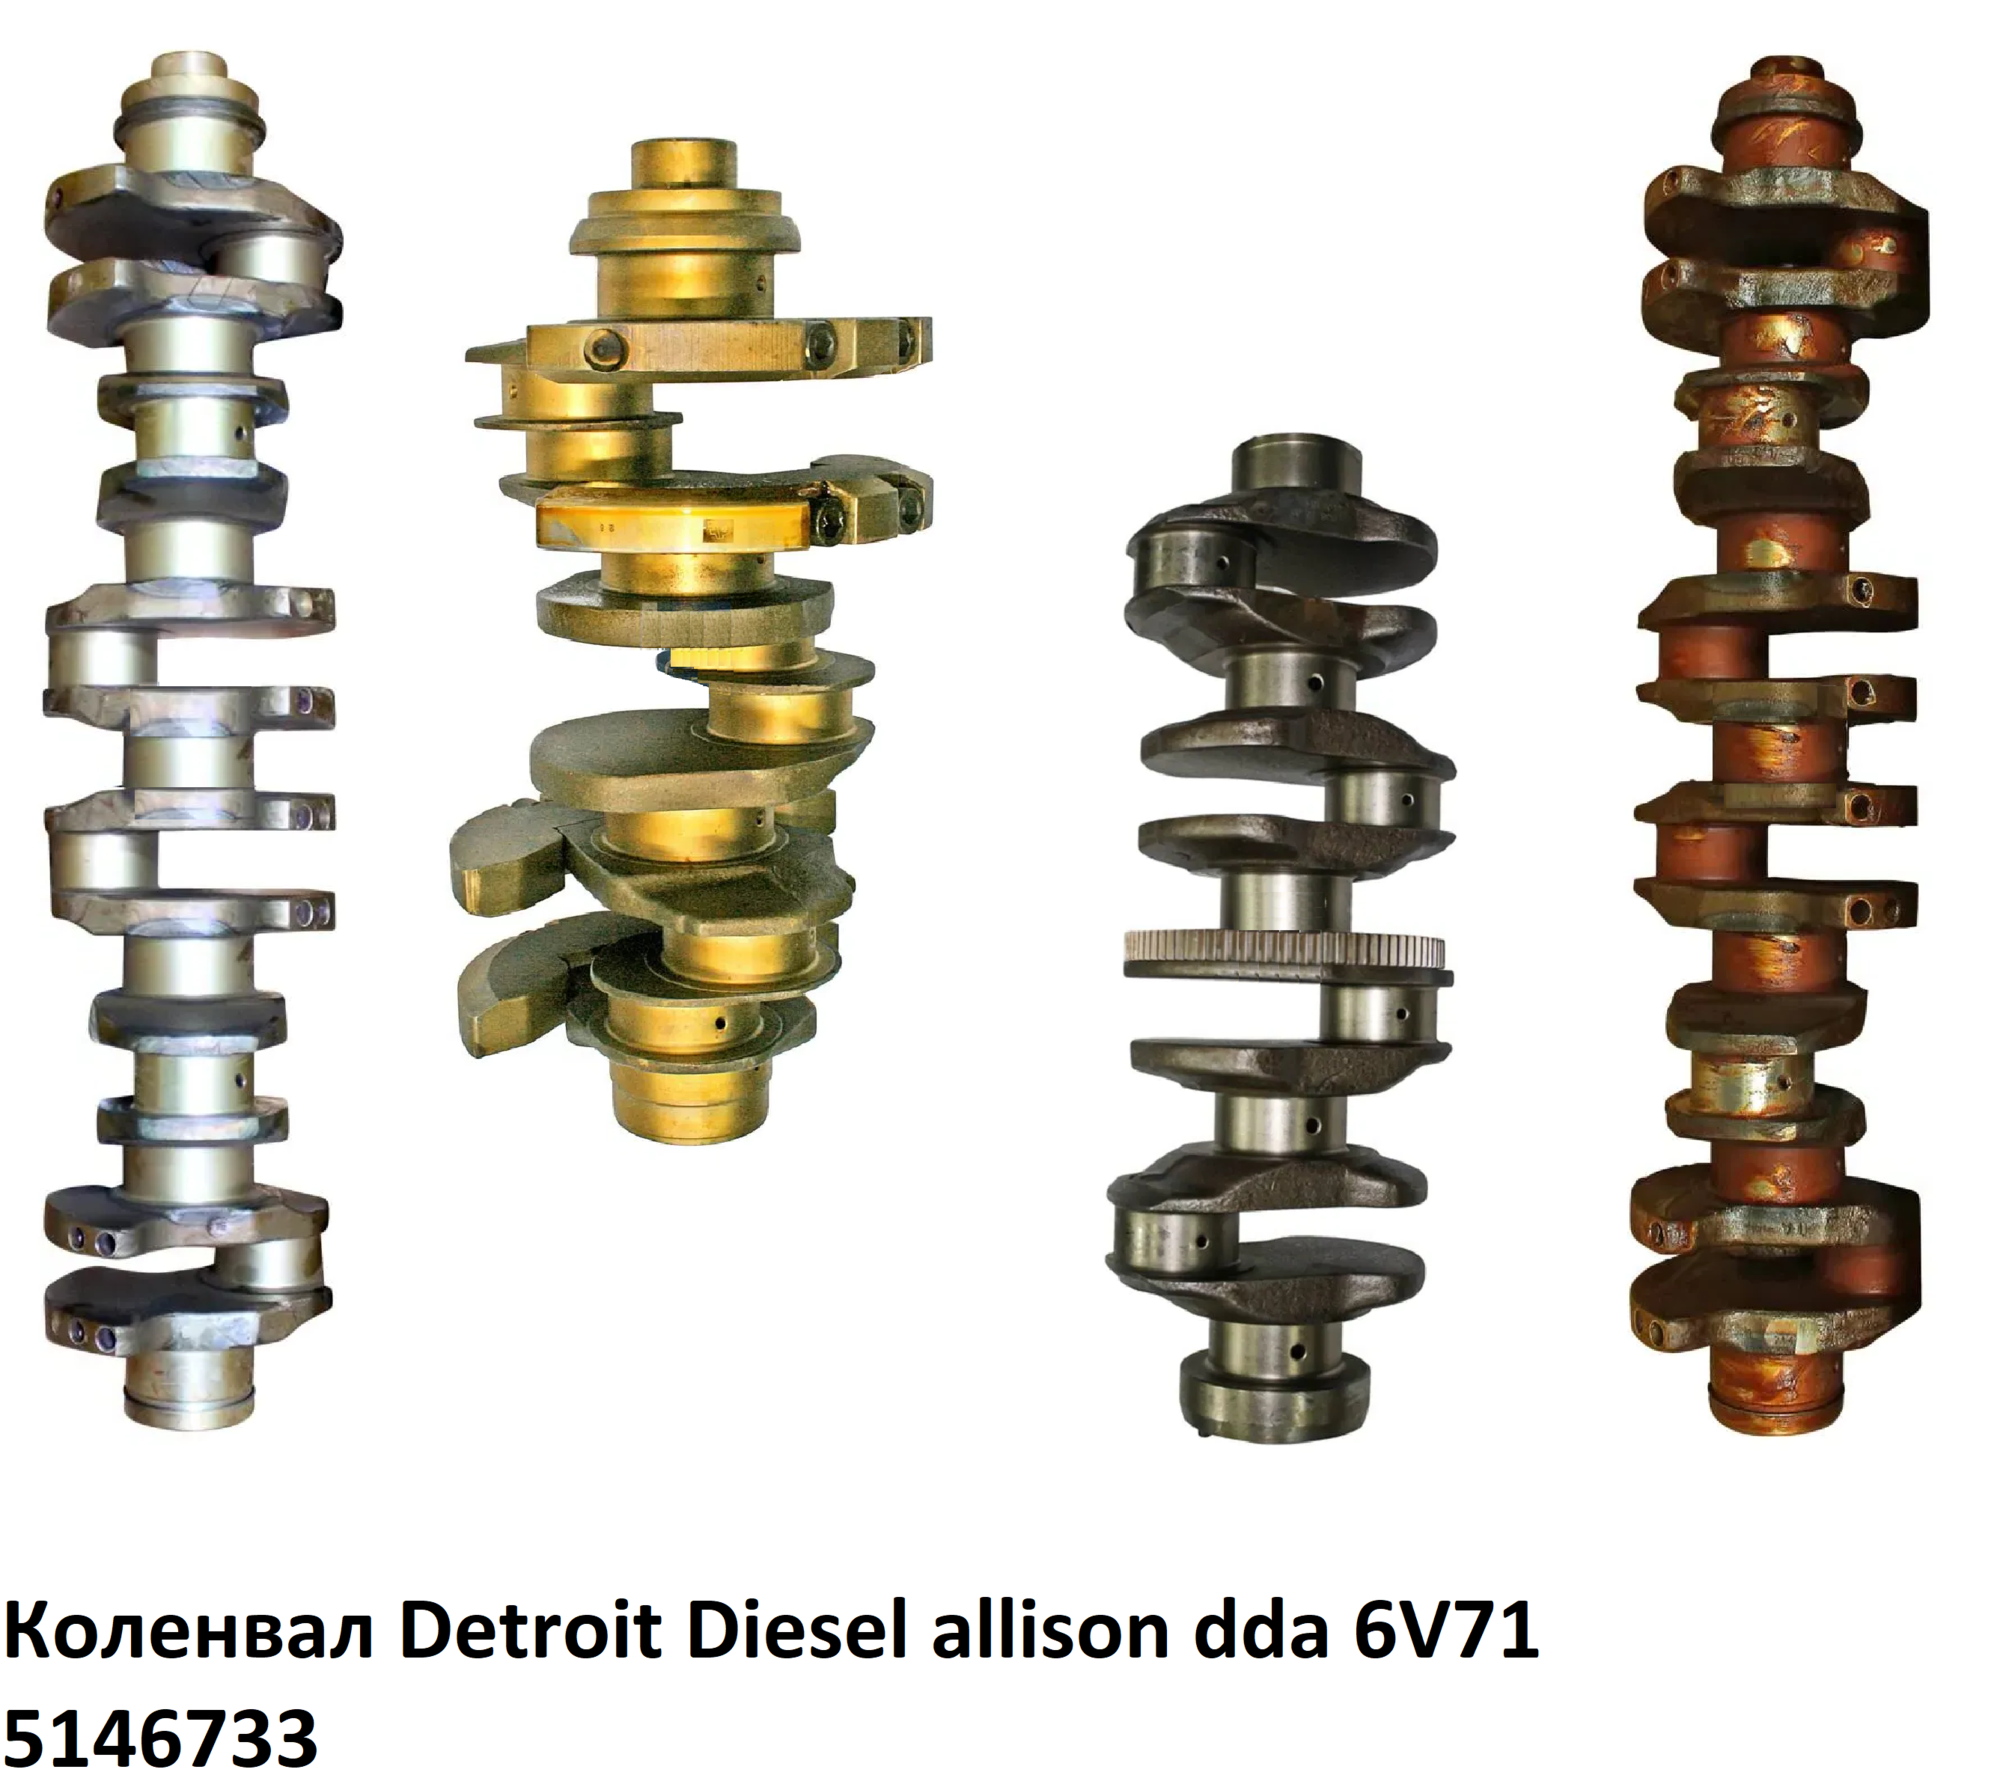 Коленвал Detroit Diesel allison dda 6V71, 5146733